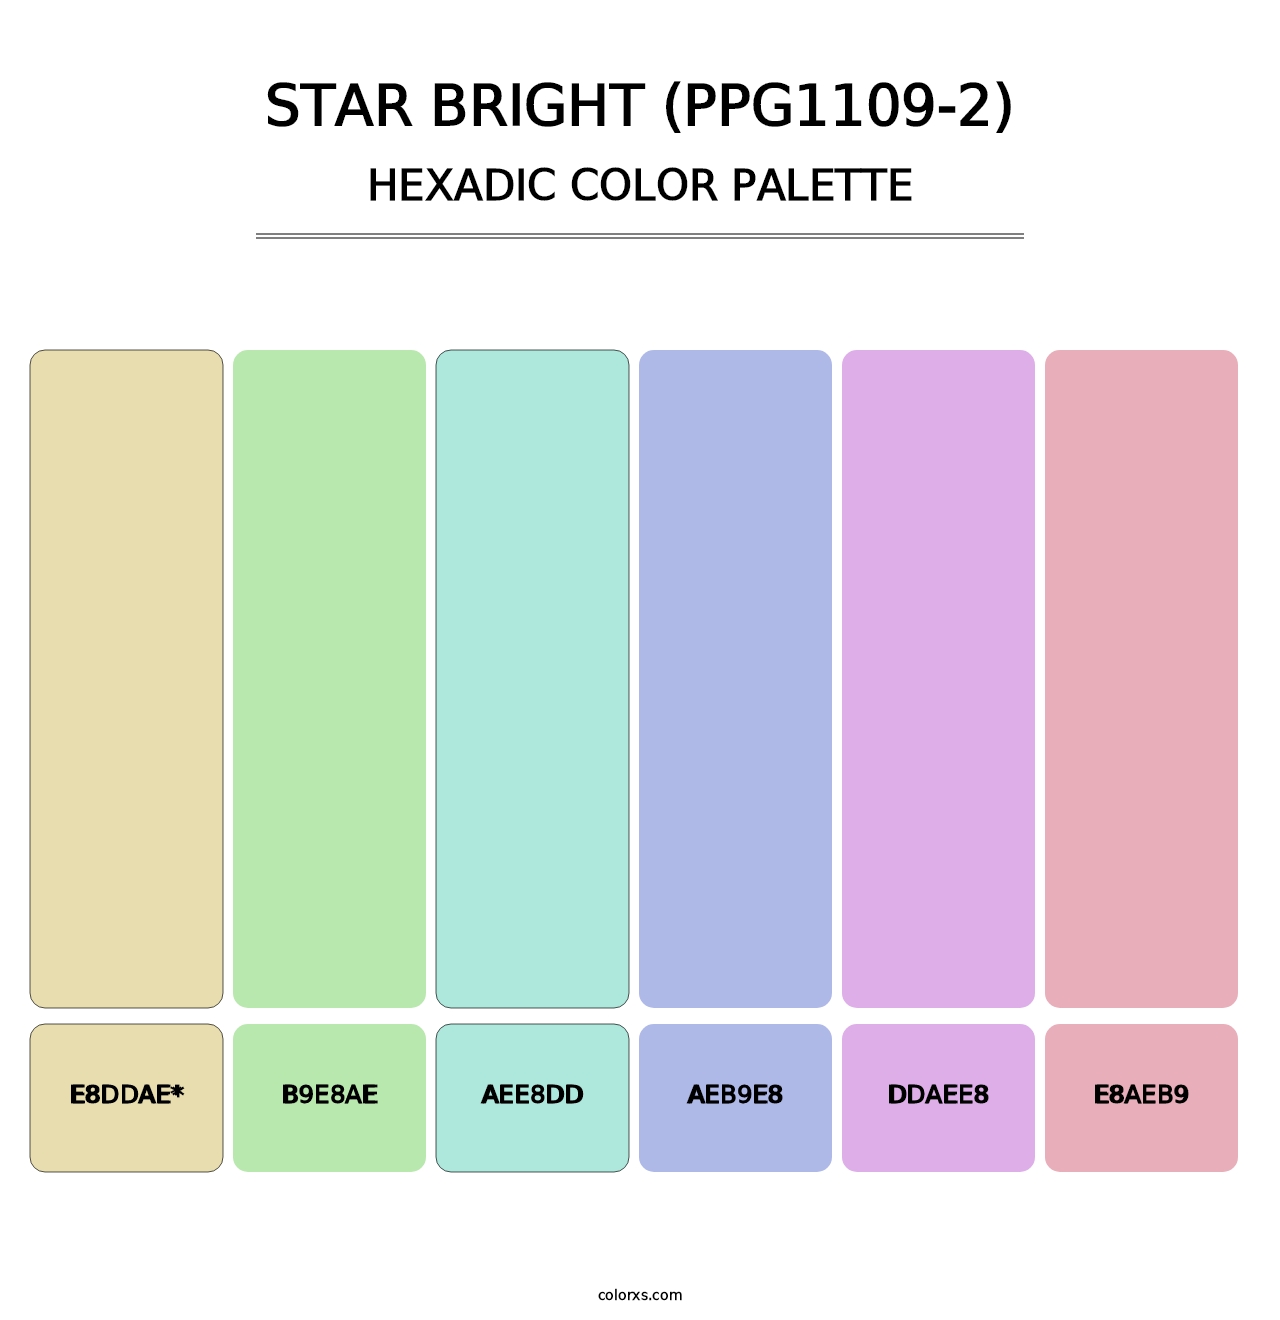 Star Bright (PPG1109-2) - Hexadic Color Palette